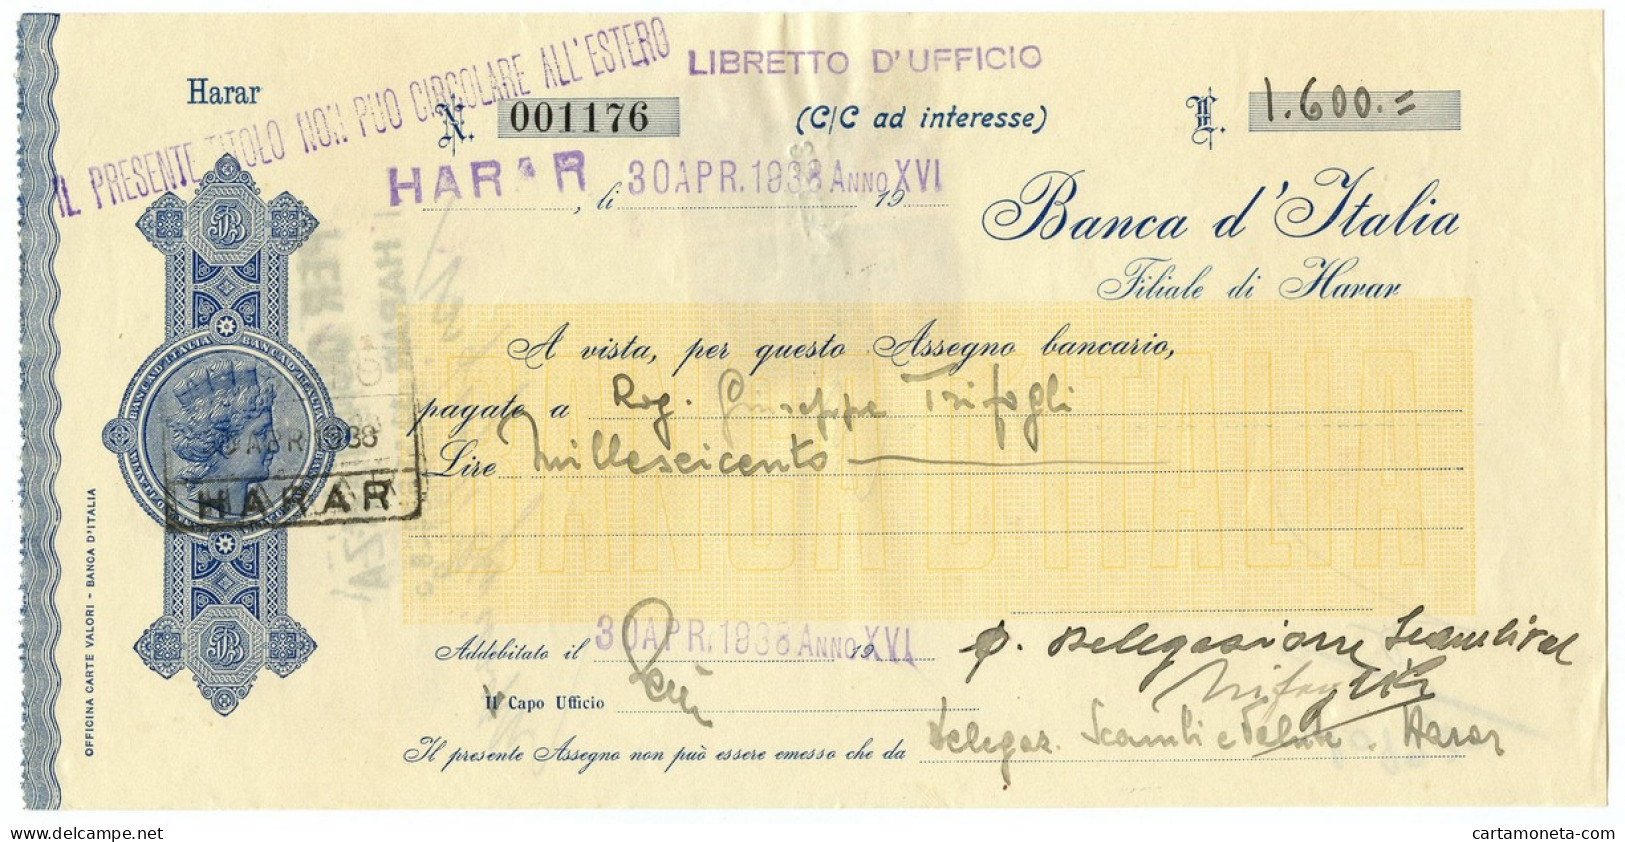 1600 LIRE ASSEGNO C/C AD INTERESSE BANCA D'ITALIA FILIALE HARAR 30/04/1938 SUP - Africa Orientale Italiana